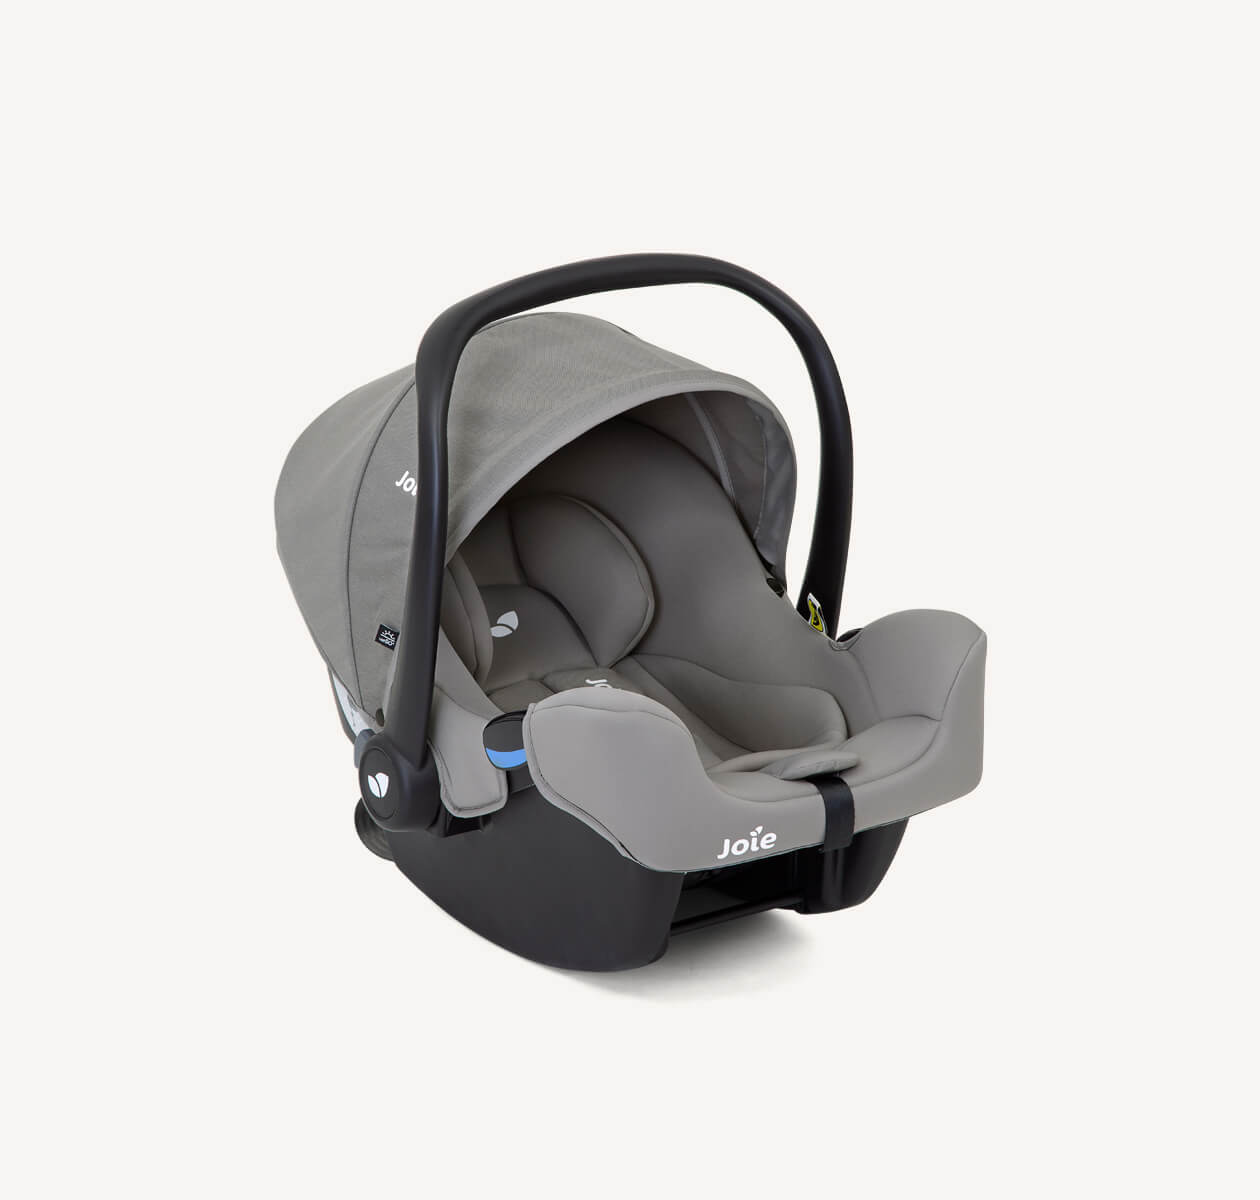 Joie i-Snug baby car seat| lightweight, safe